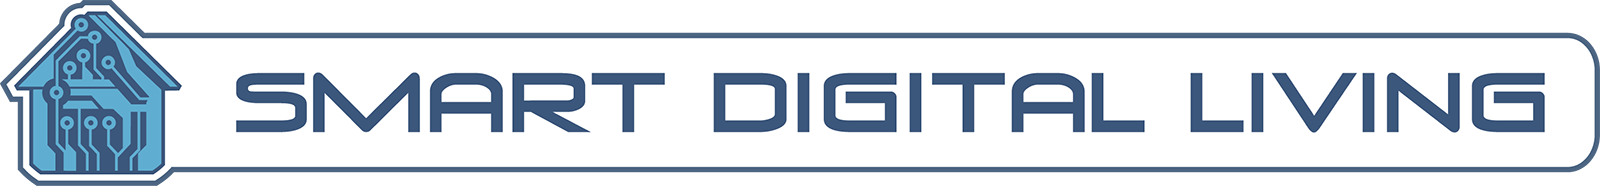 Smart Digital Living Logo